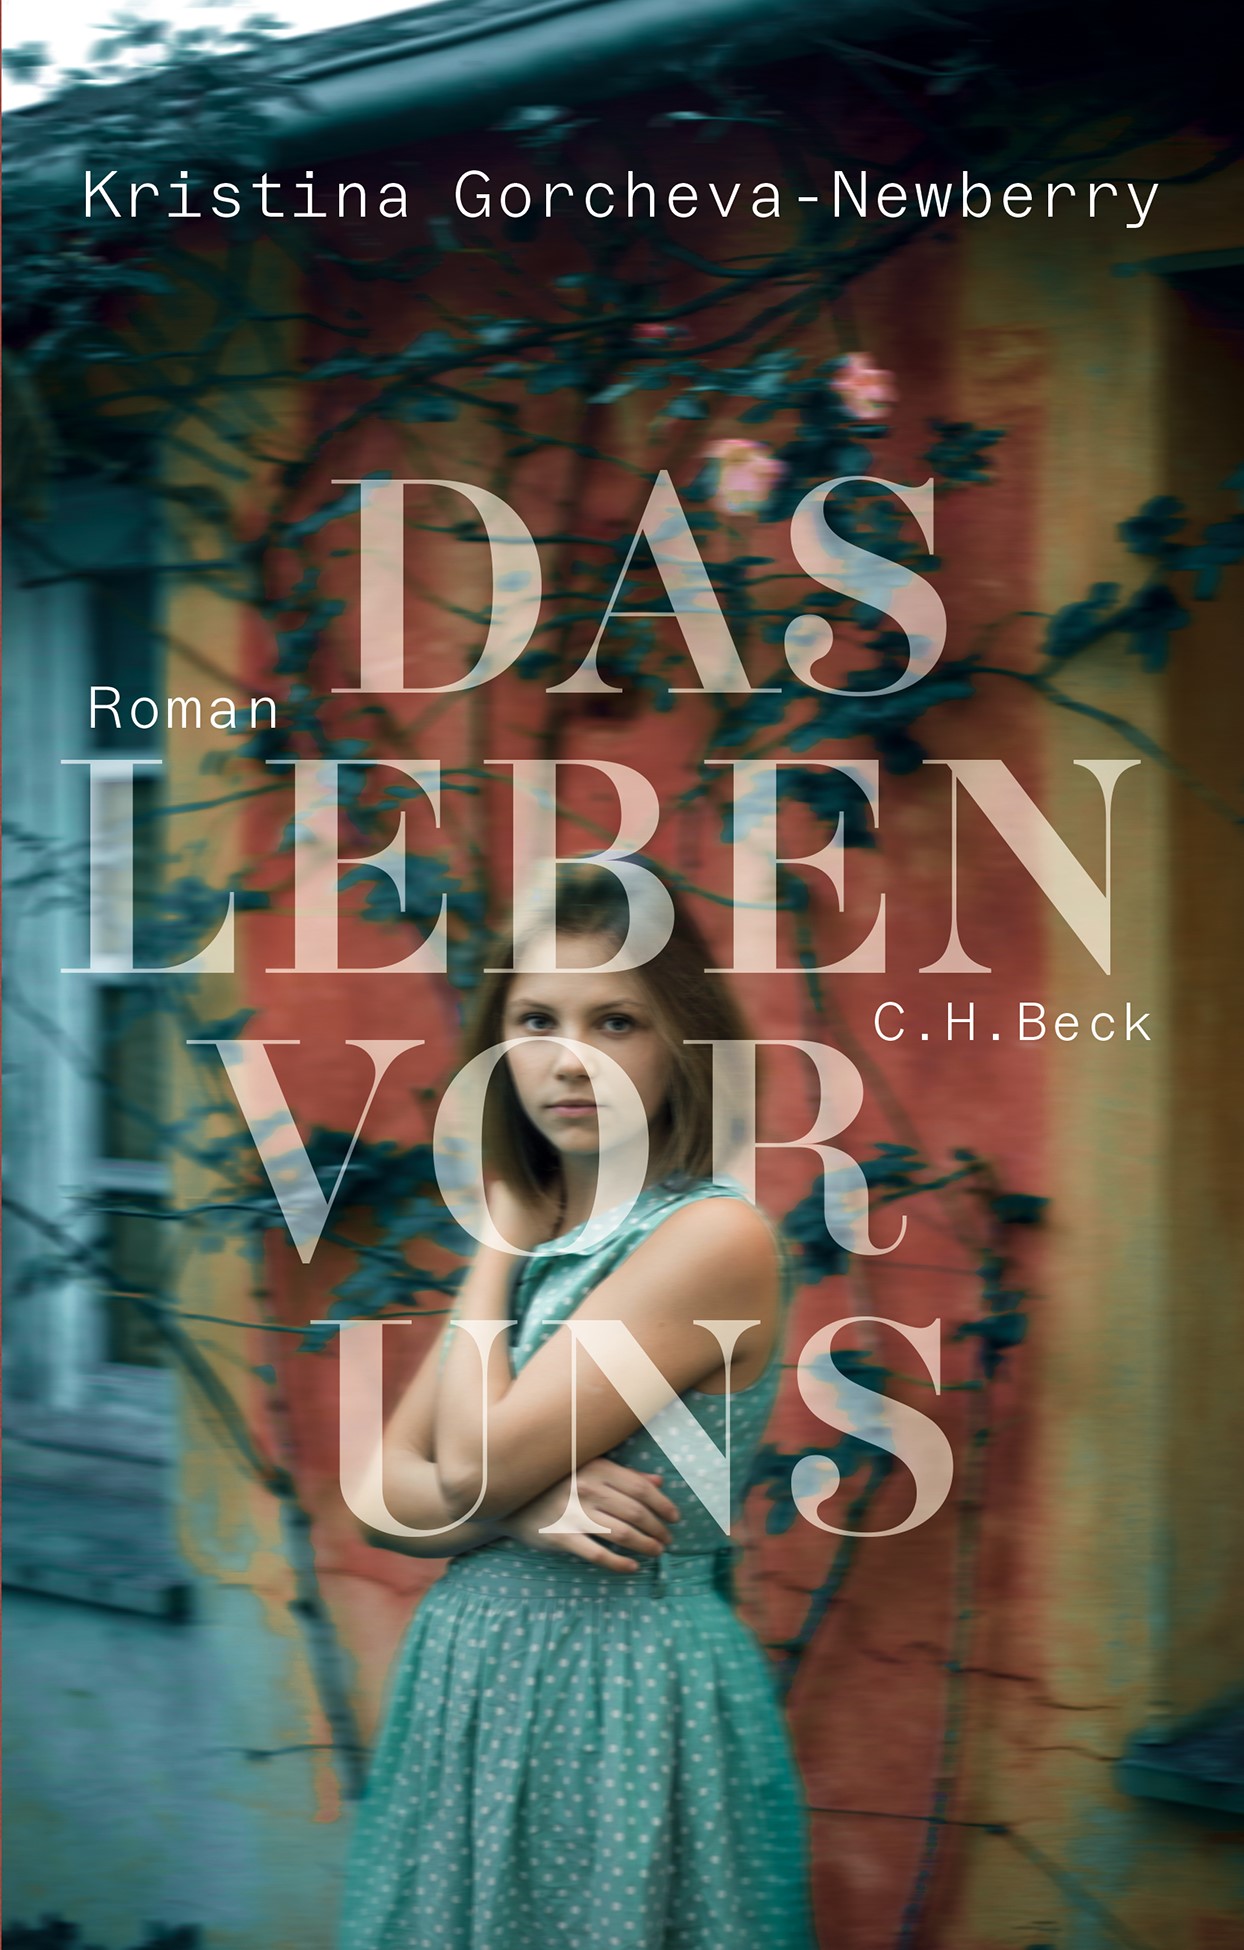 Cover: Gorcheva-Newberry, Kristina, Das Leben vor uns